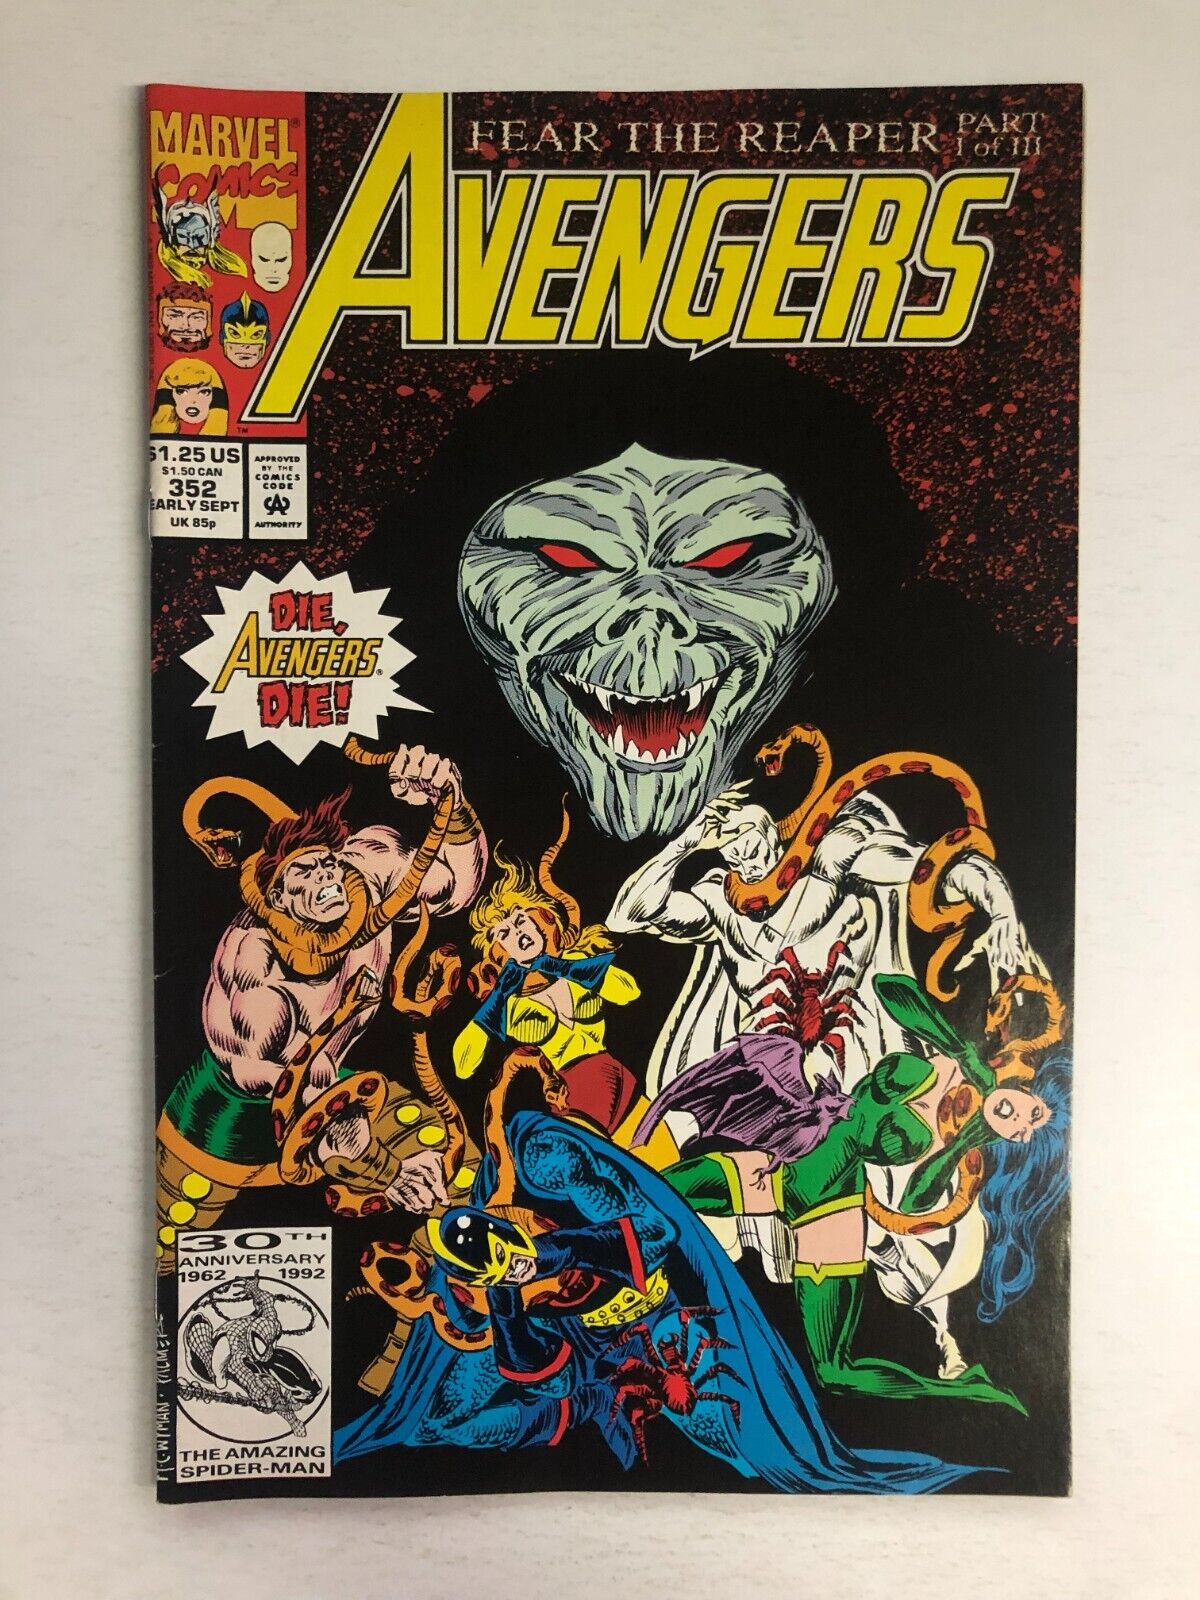 Avengers #352 - Len Kaminski - 1992 - Possible CGC comic